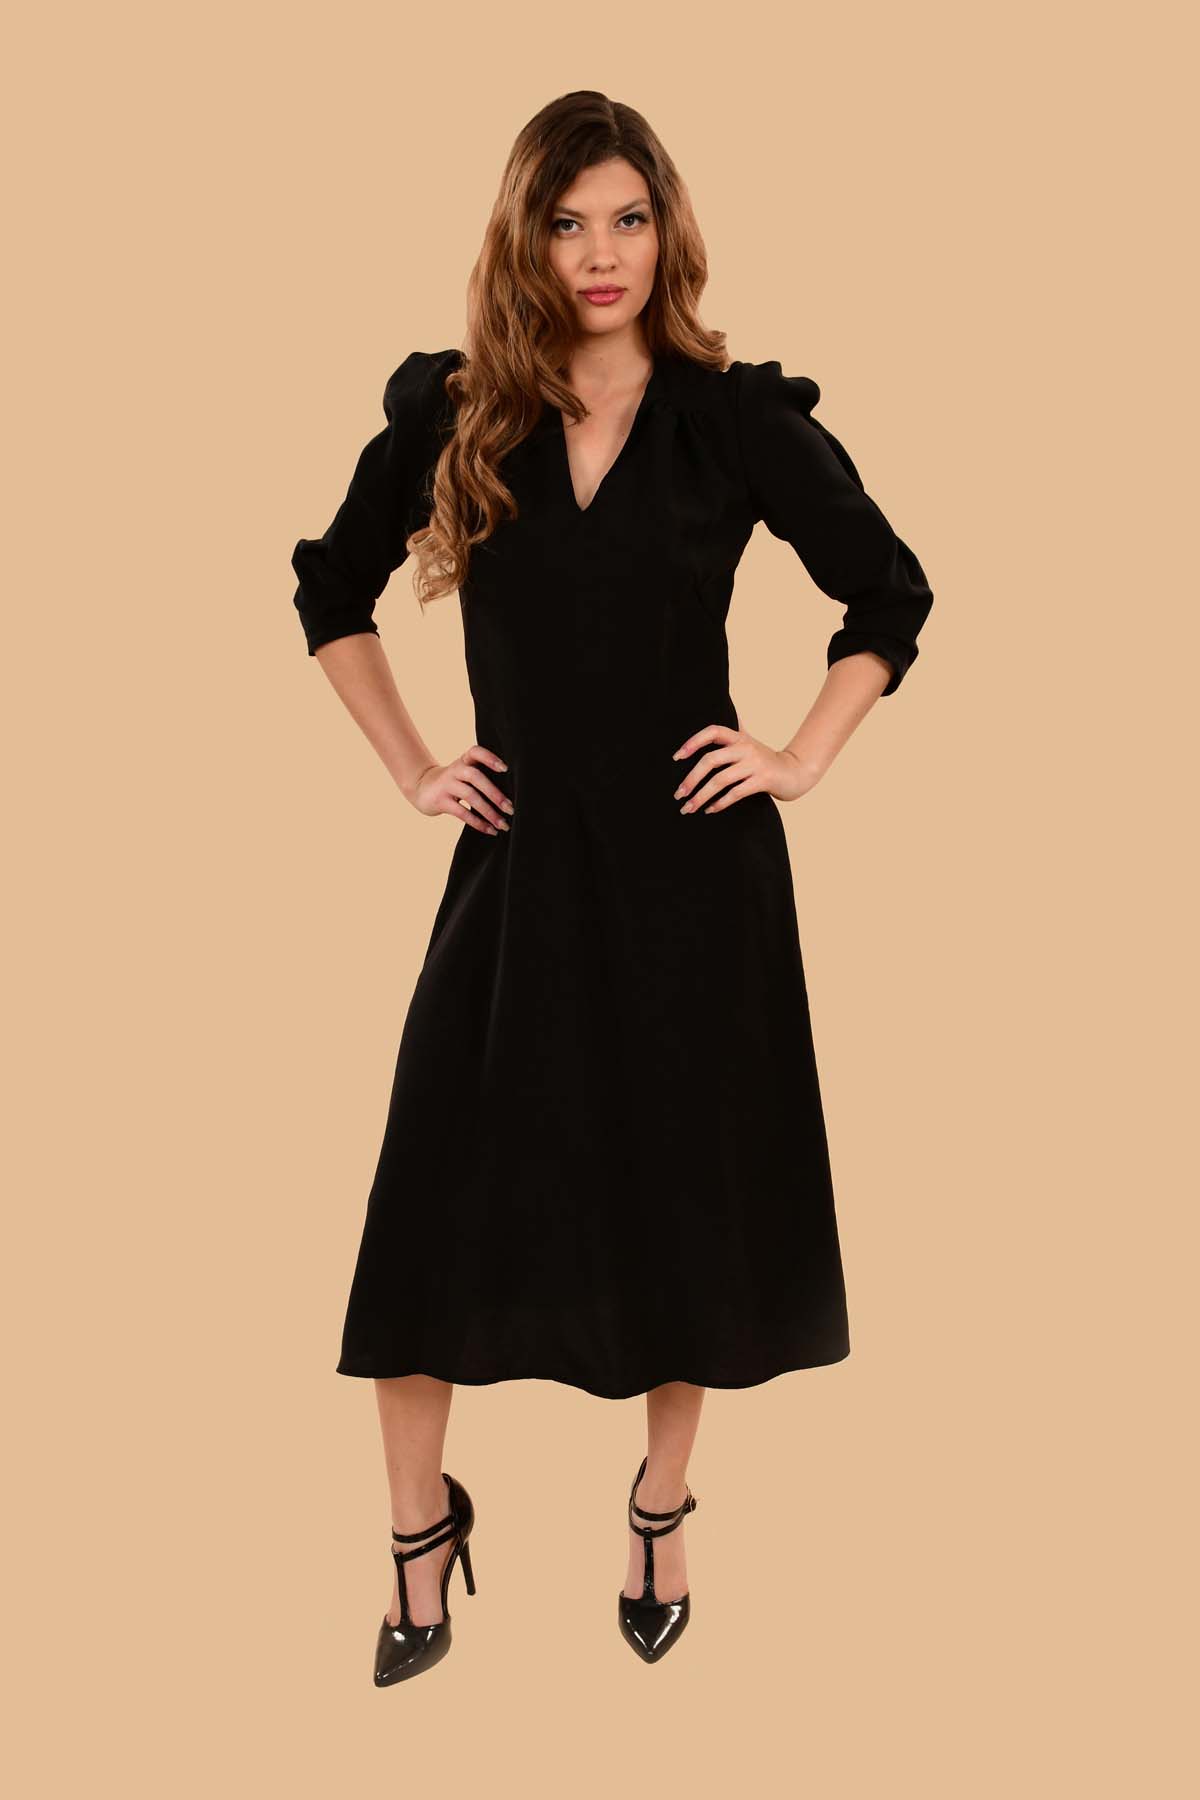 Black Midi Dress | Buy a Rayon Ava Black Midi Dress with Sleeves